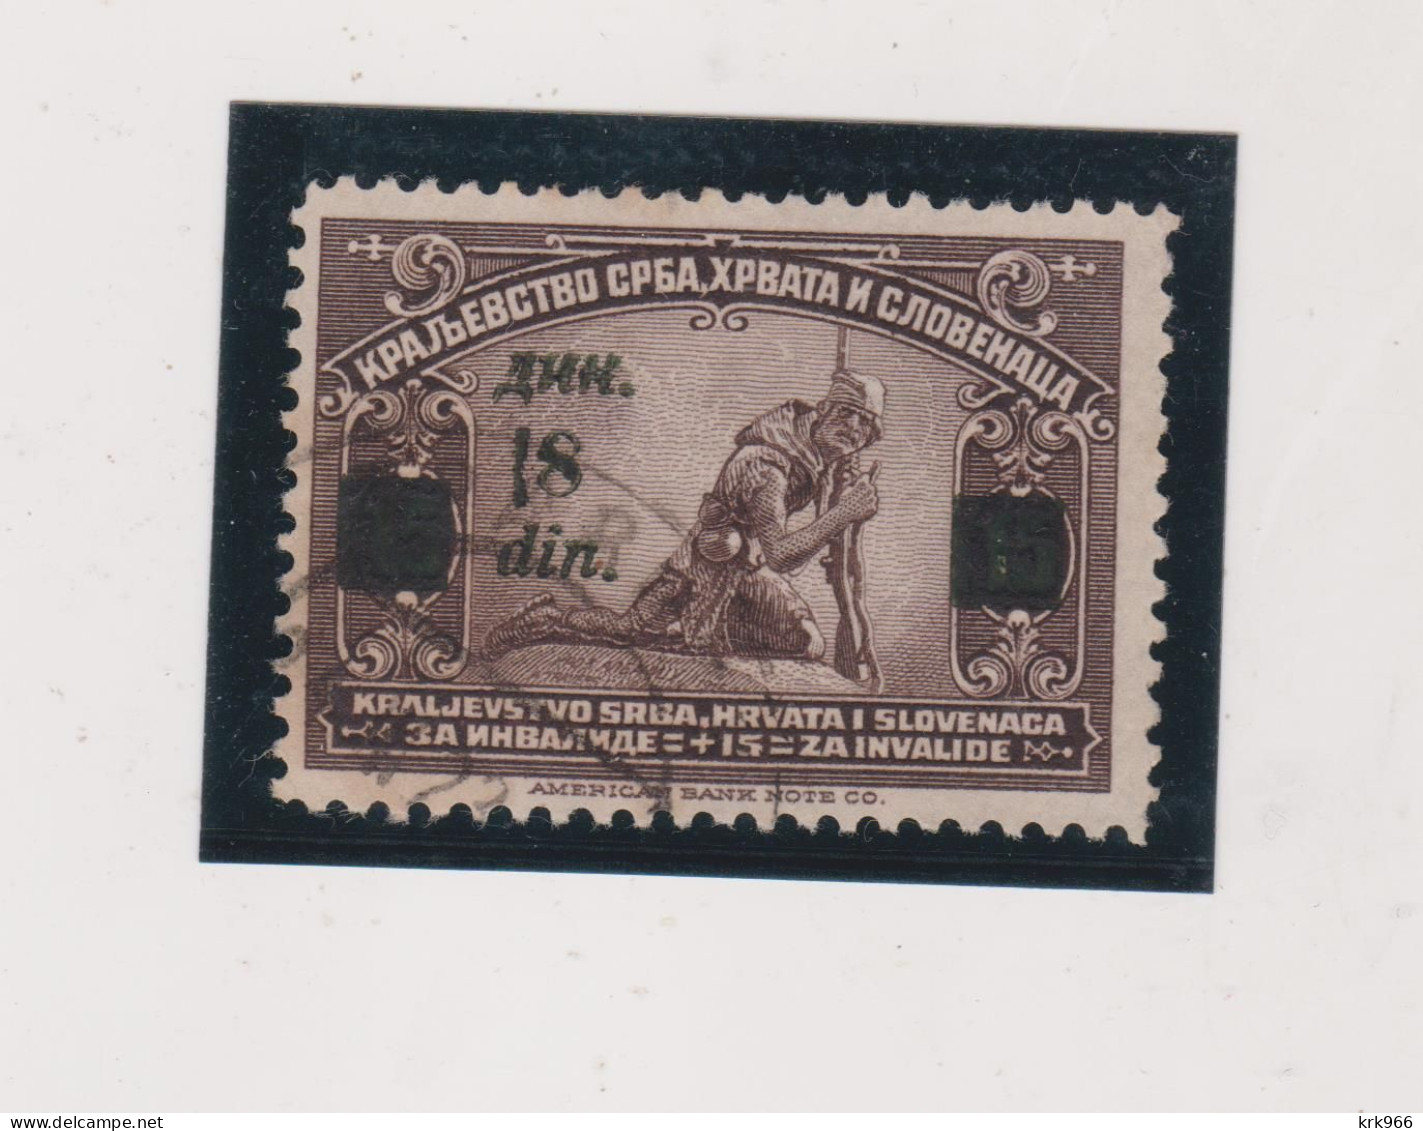 YUGOSLAVIA,8 Din / 15 P Used Nice Error 18 Din - Used Stamps